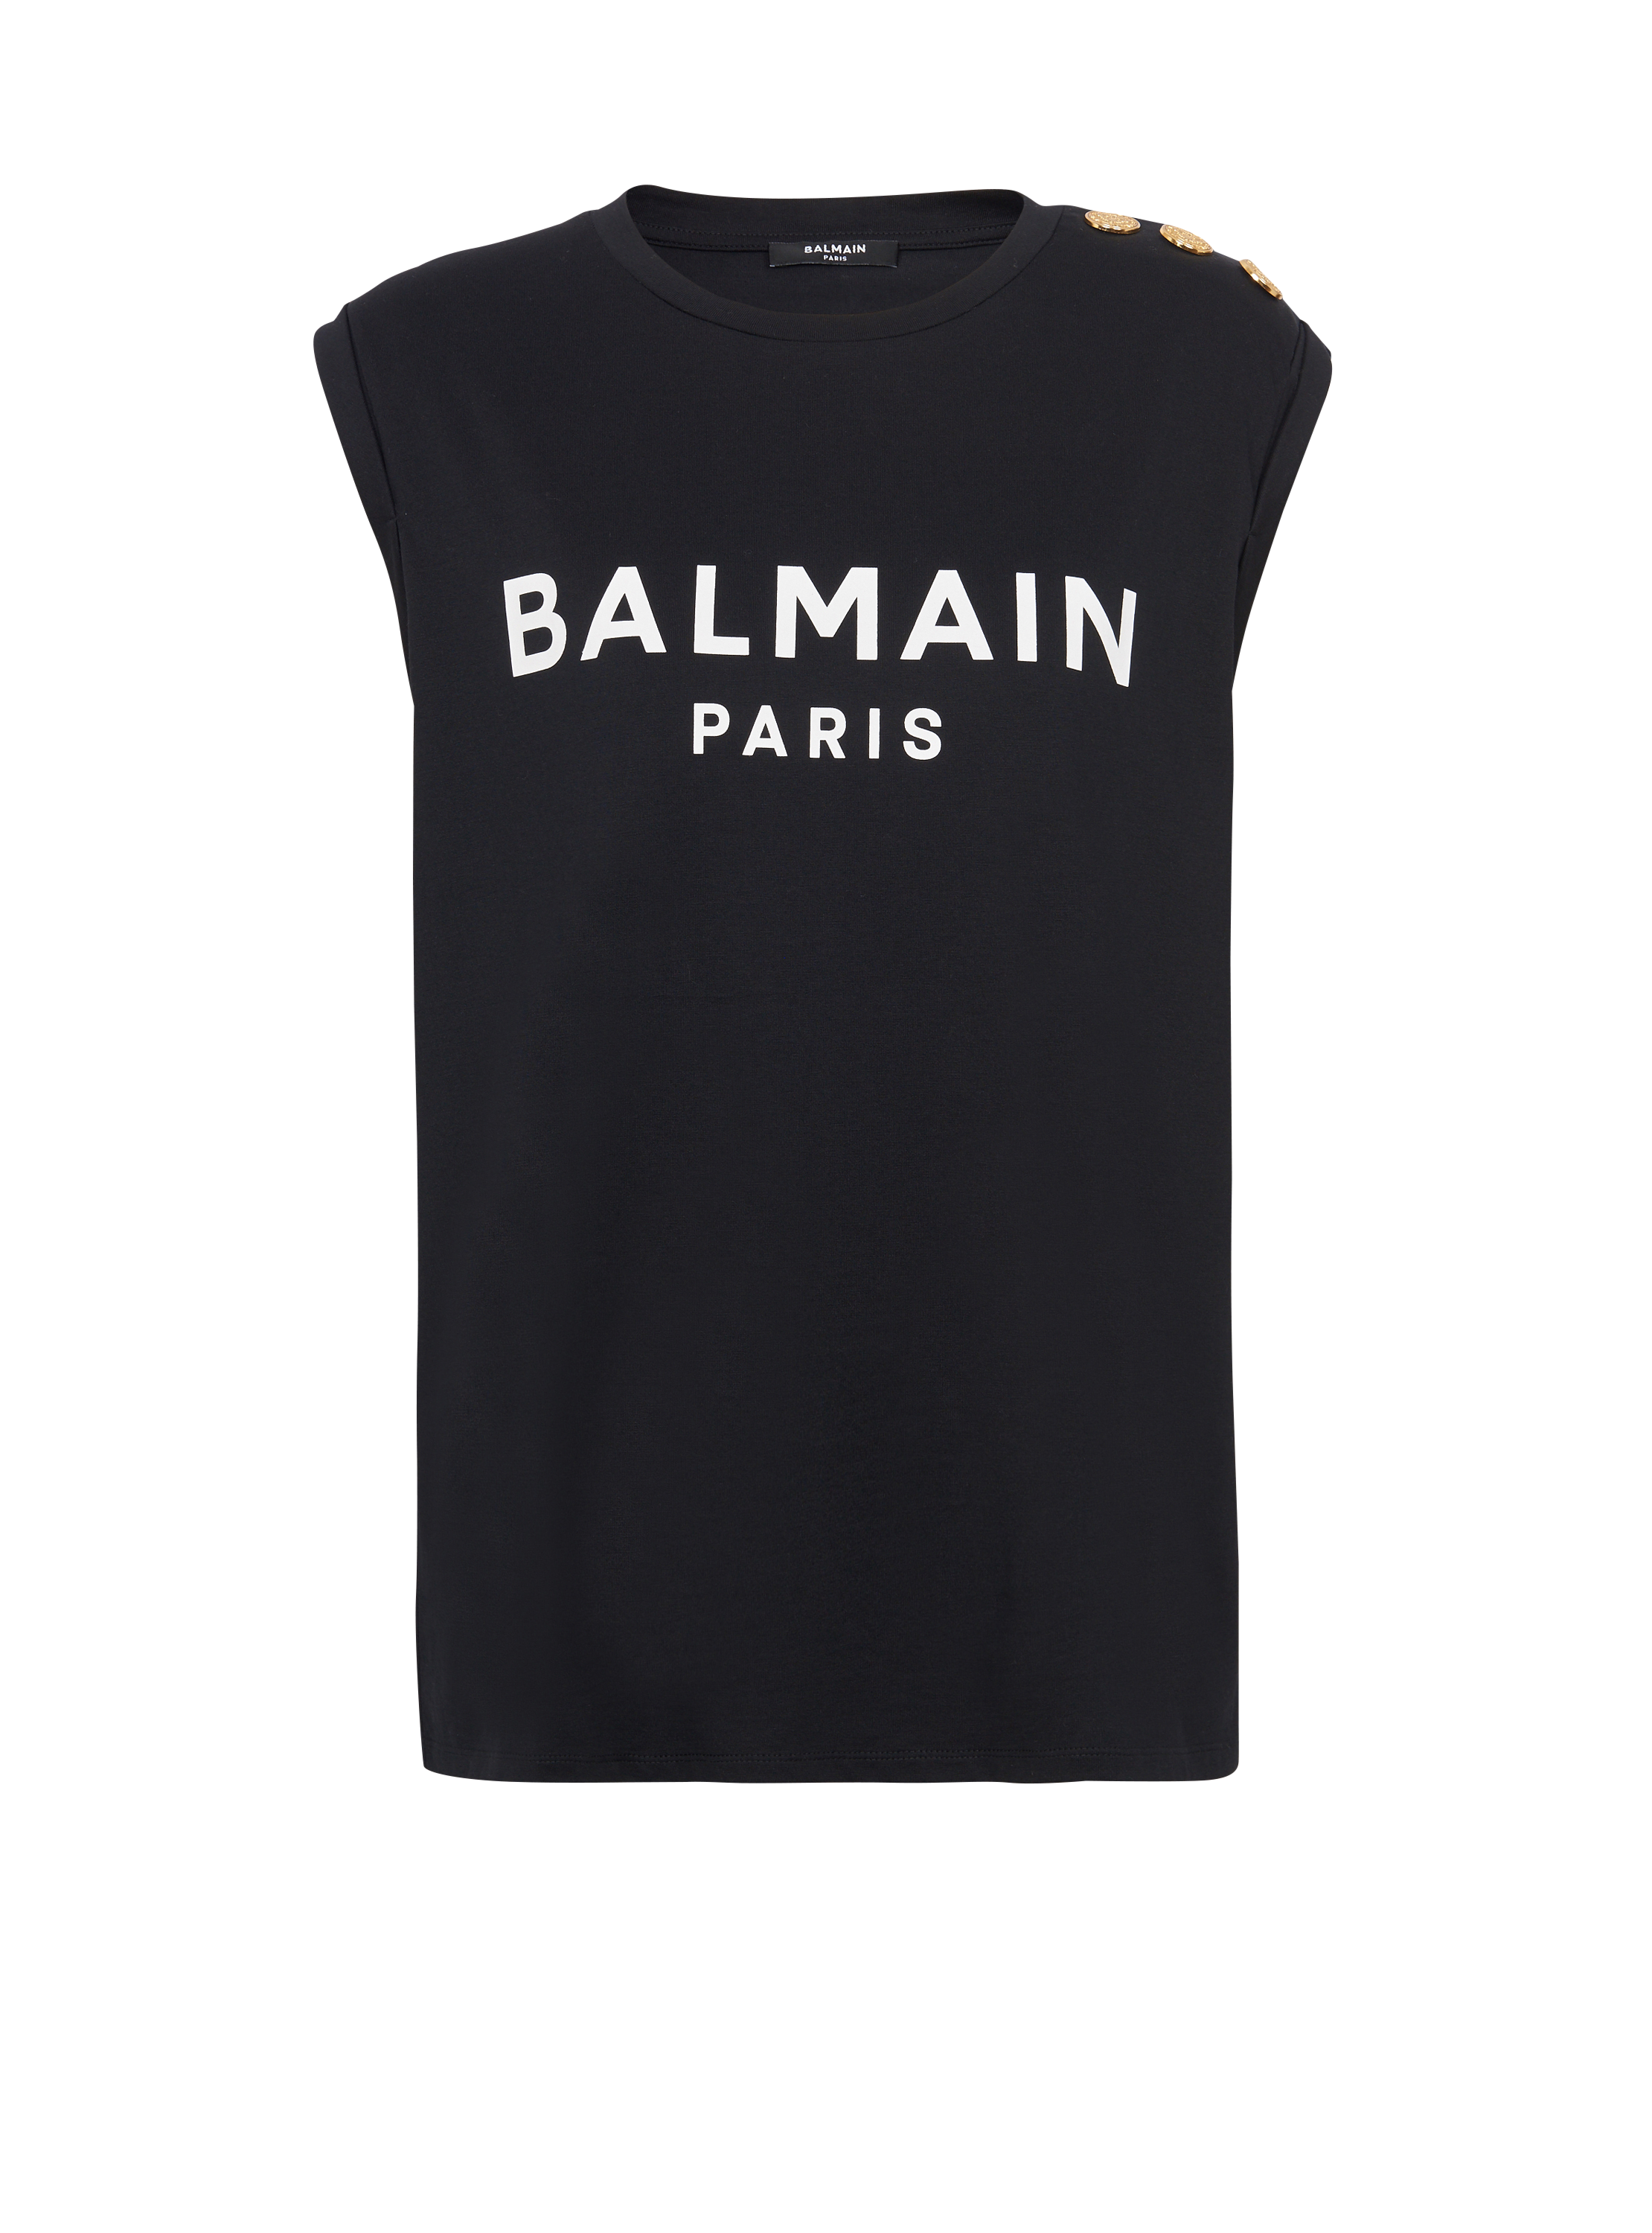 Camiseta sin mangas con estampado Balmain Paris